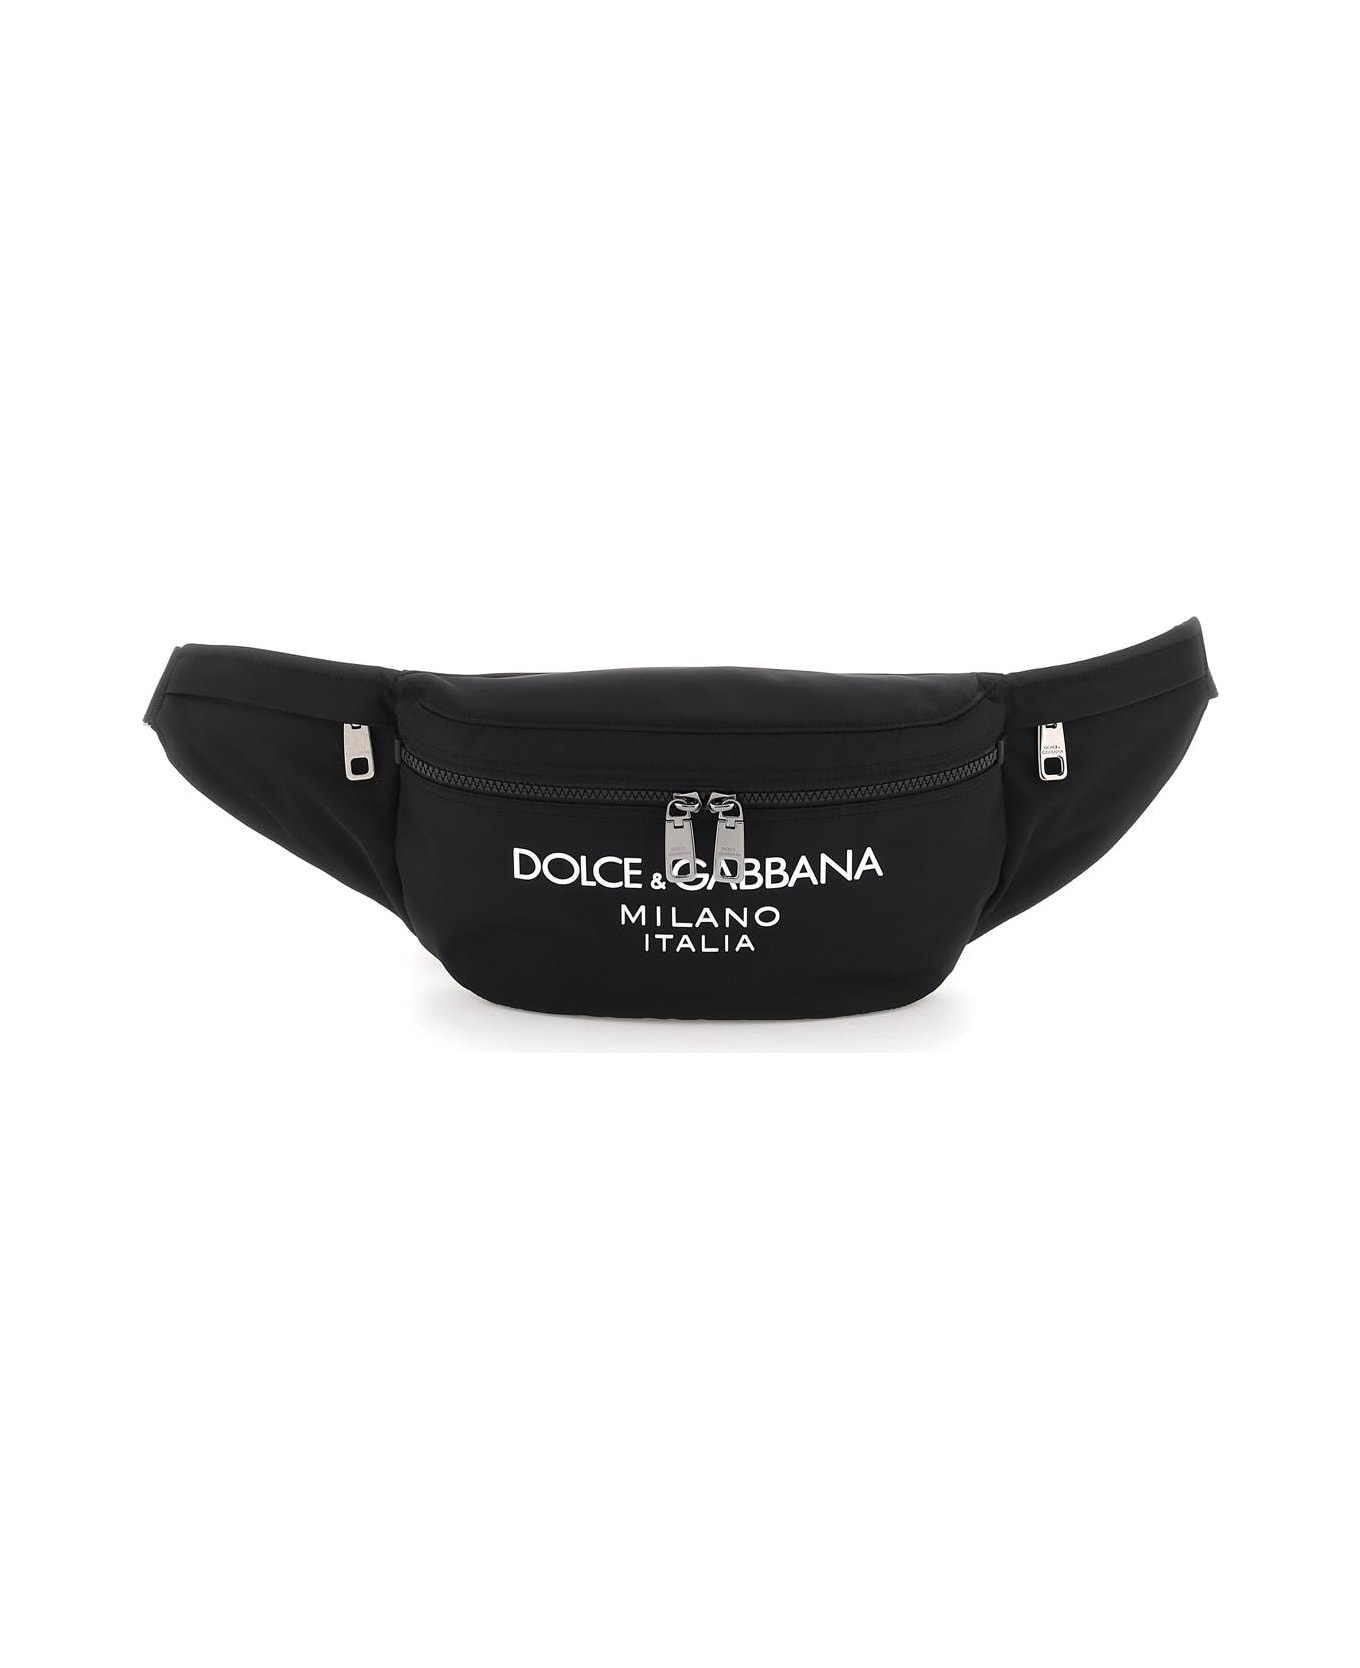 Dolce & Gabbana Nylon Fanny Pack - Black